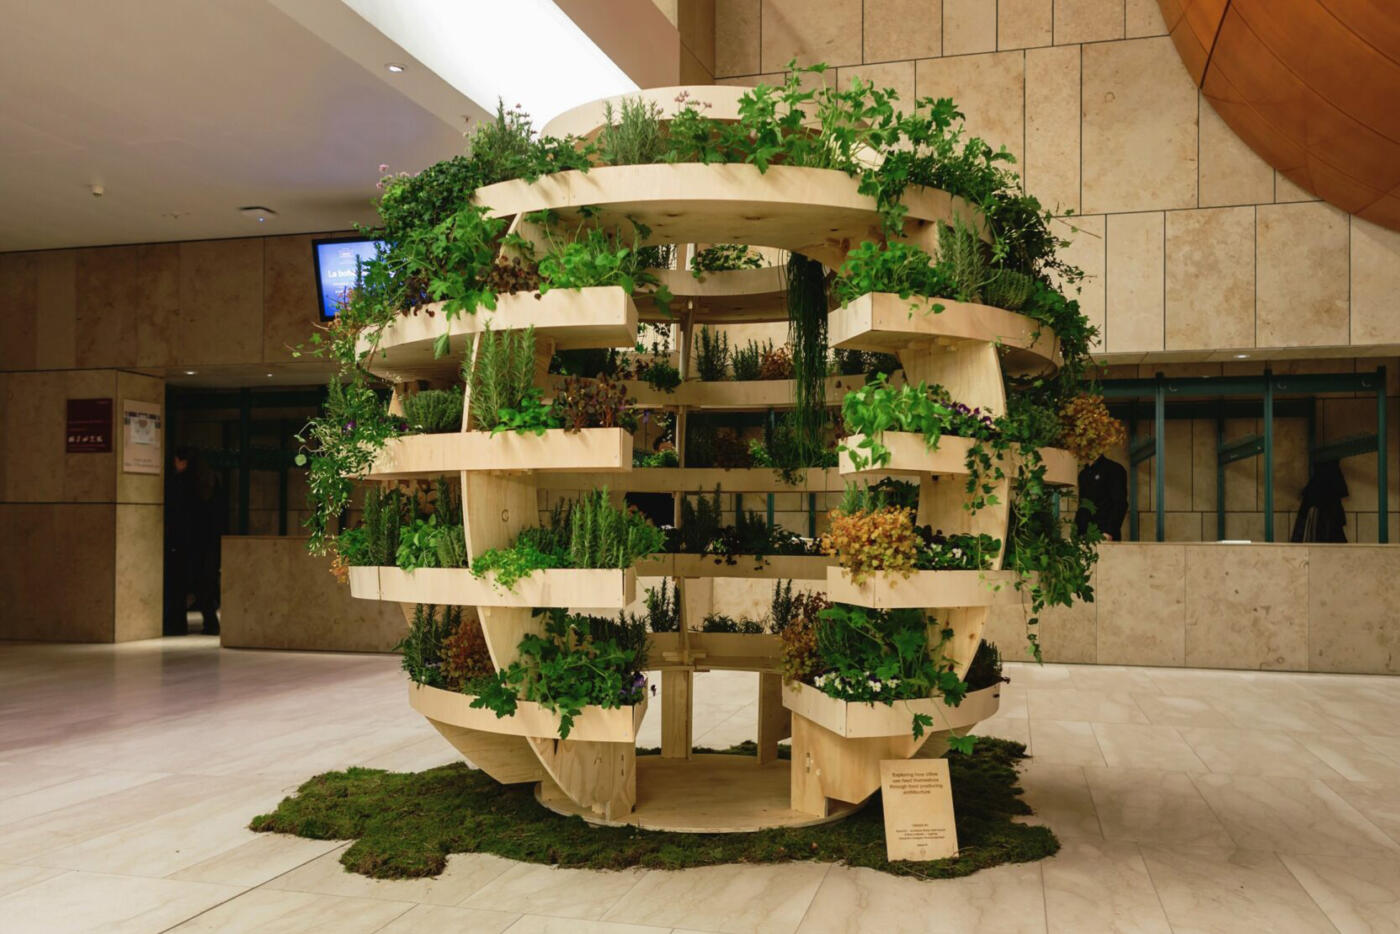 urban farming pavilion